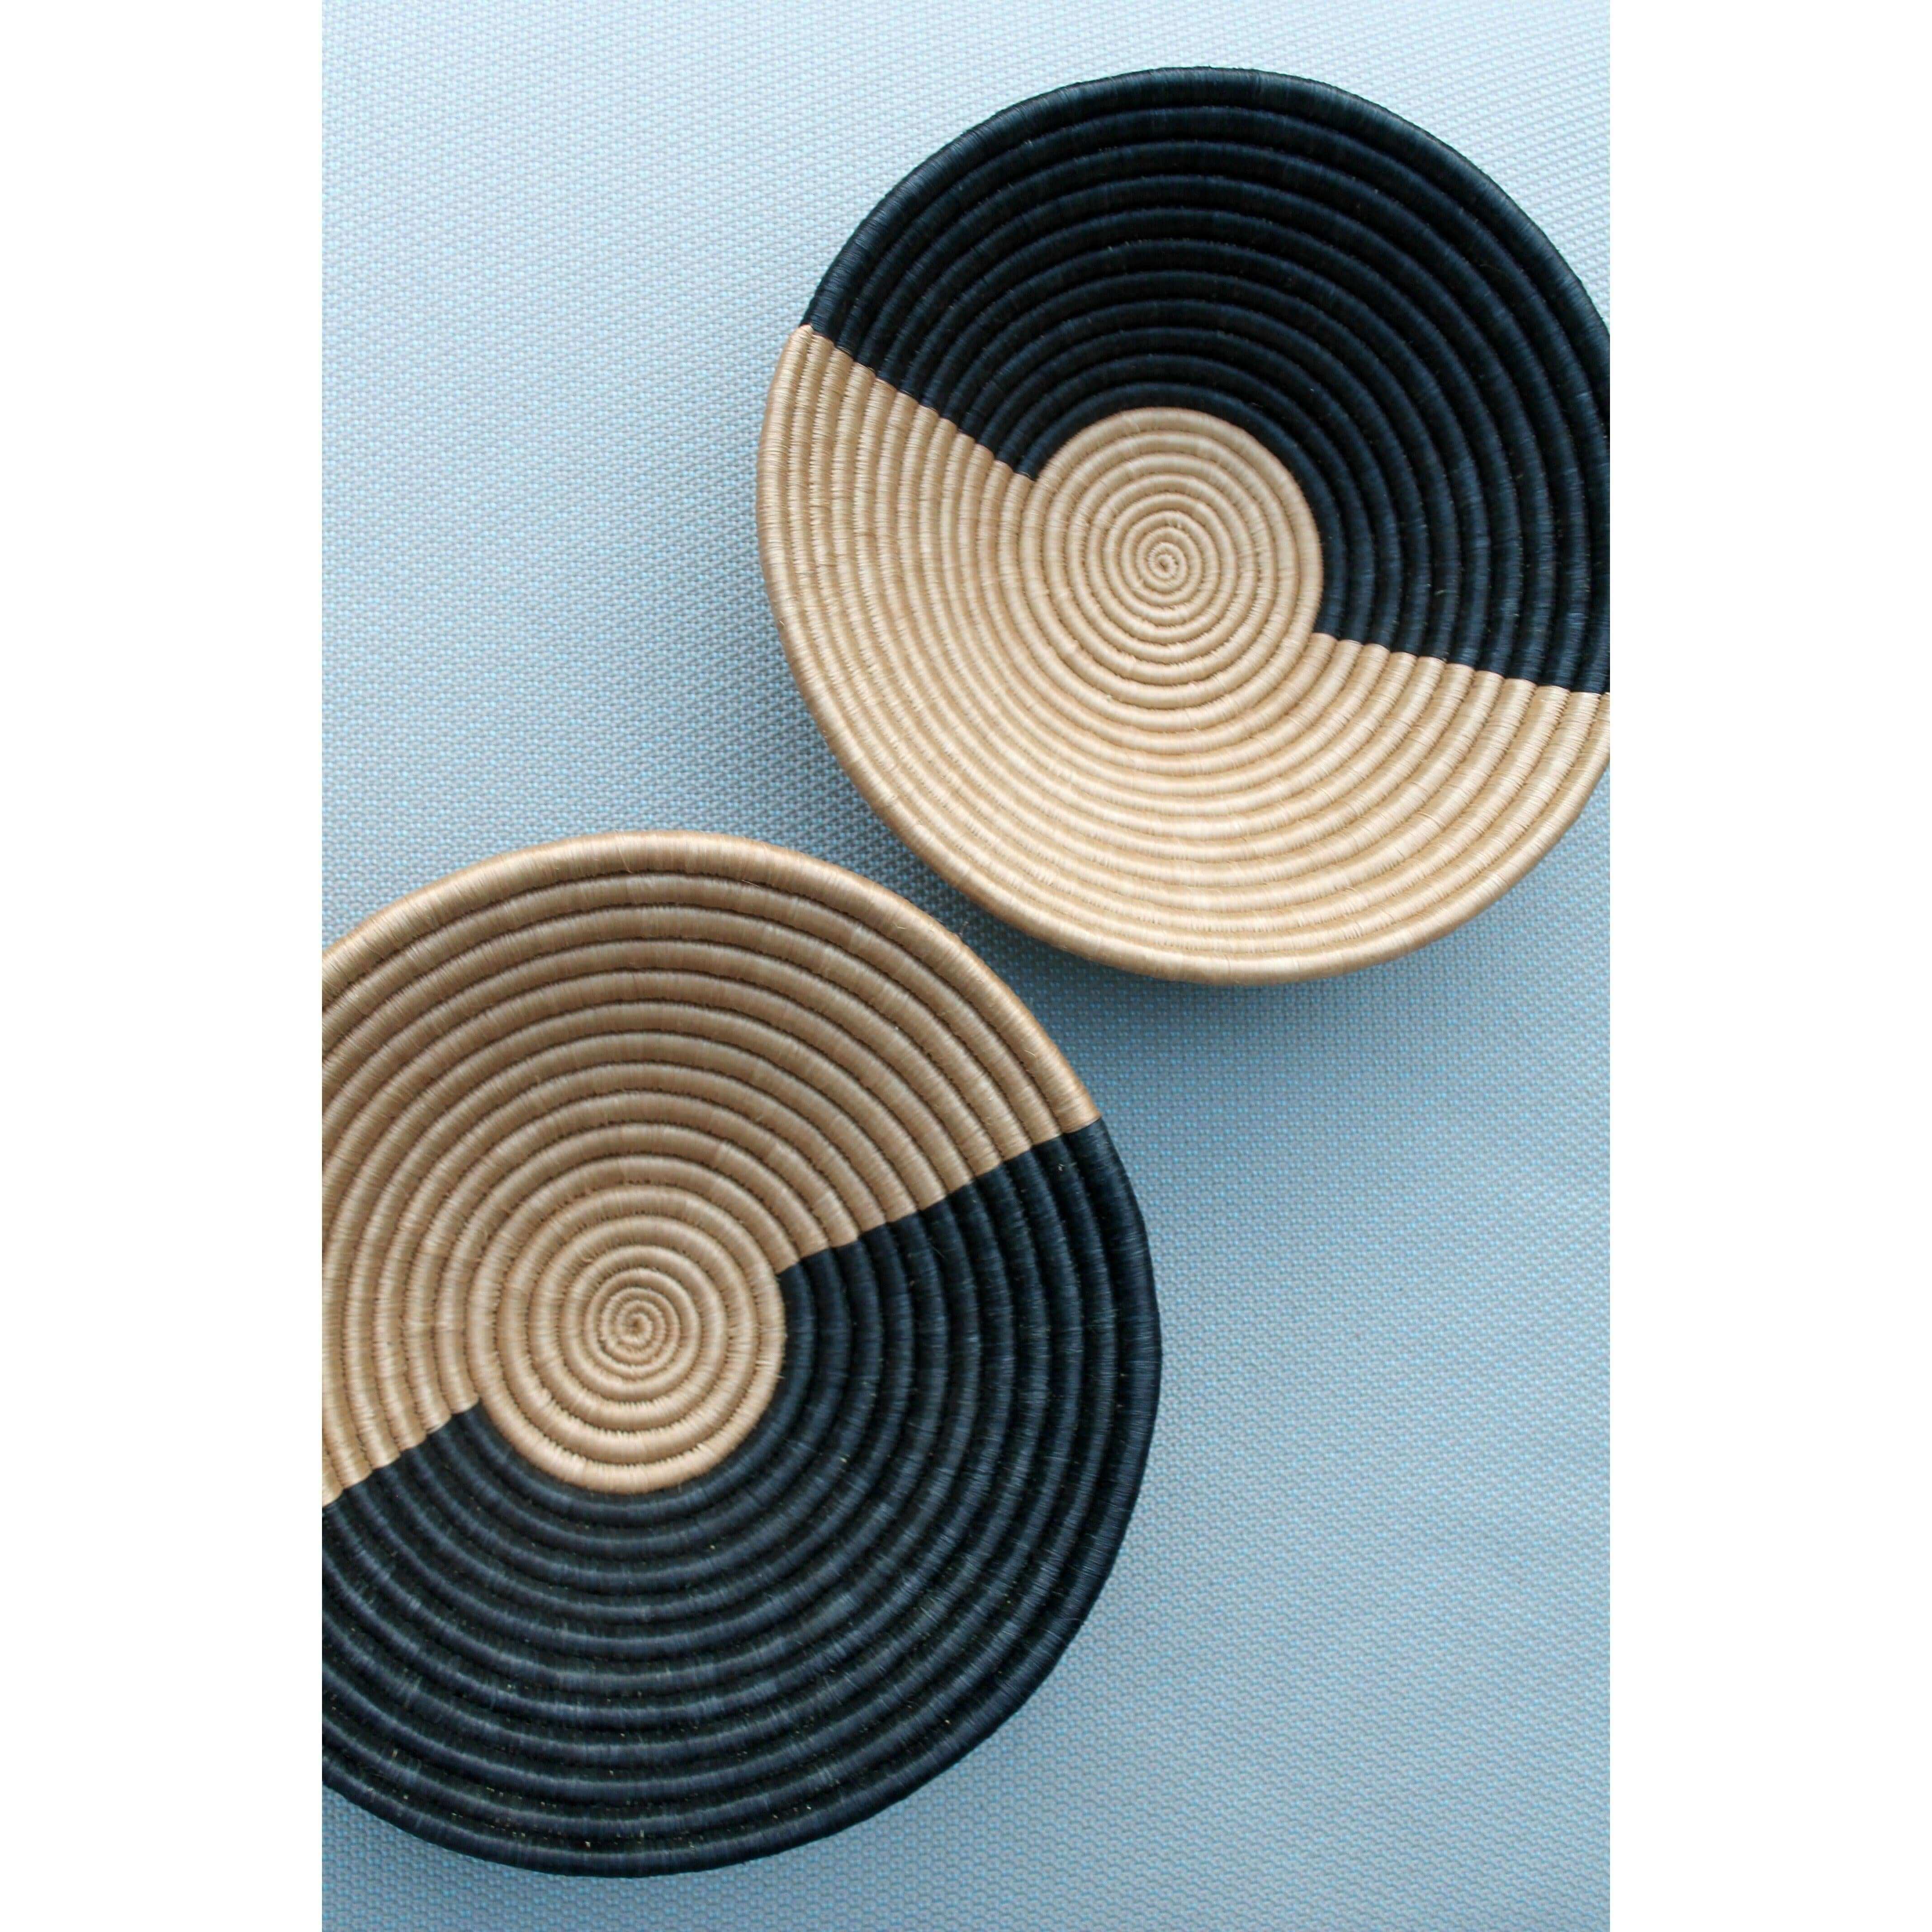 Woven baskets handmade by East African artisans